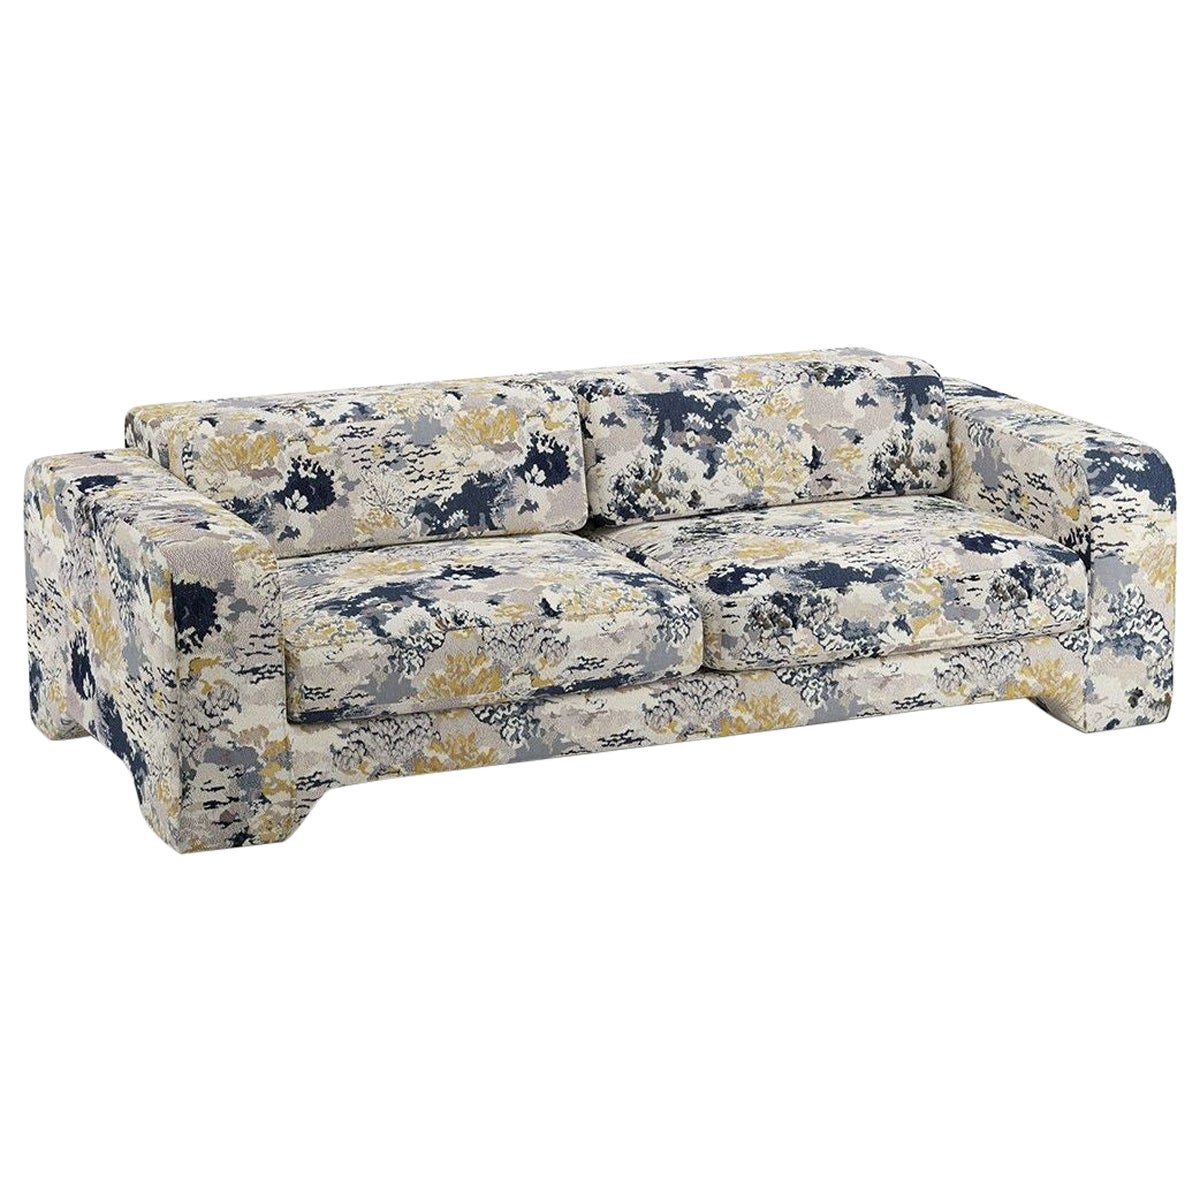 Popus Editions Giovanna 3 Seater Sofa in Indigo Marrakech Jacquard Fabric